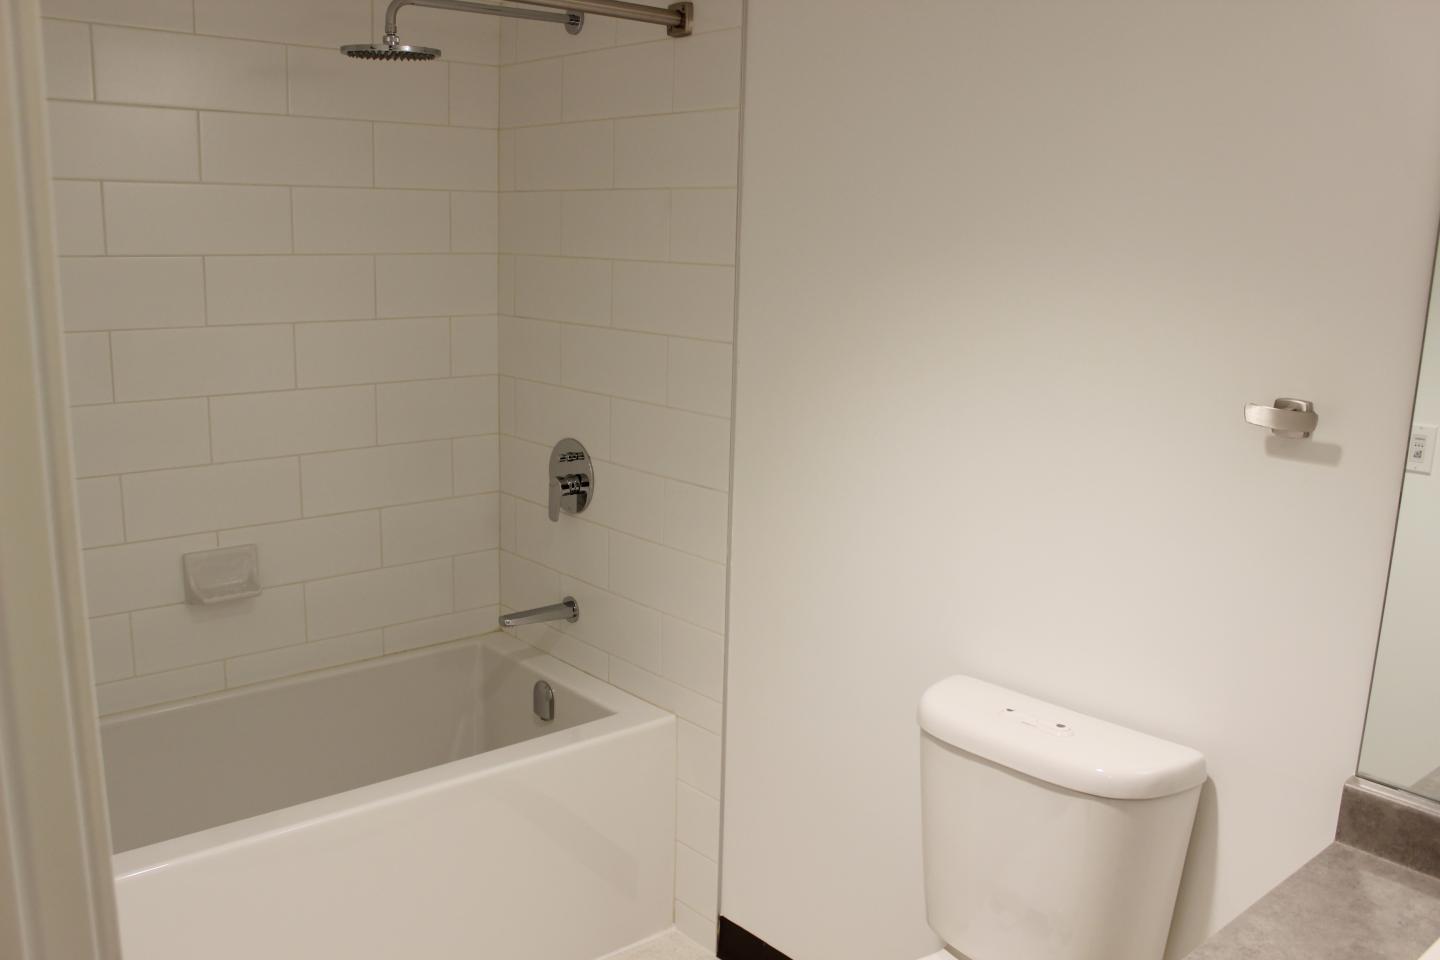 Unit photo - bathroom